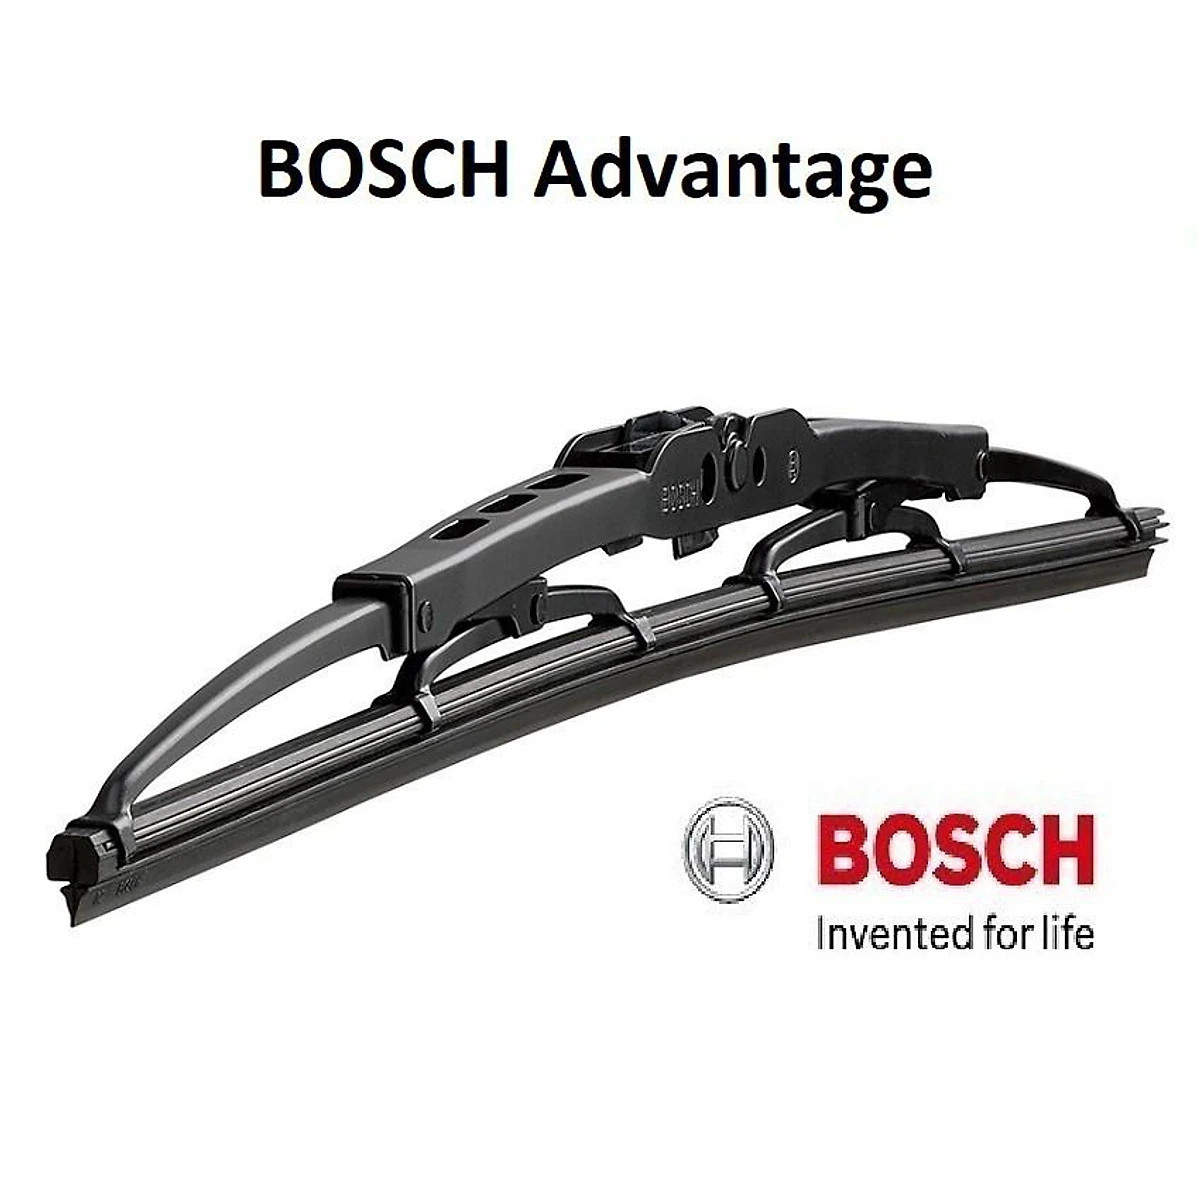 Gạt mưa sau Ford Escape (2001-2013) chính hãng Bosch ADVANTAGE BA 12inch